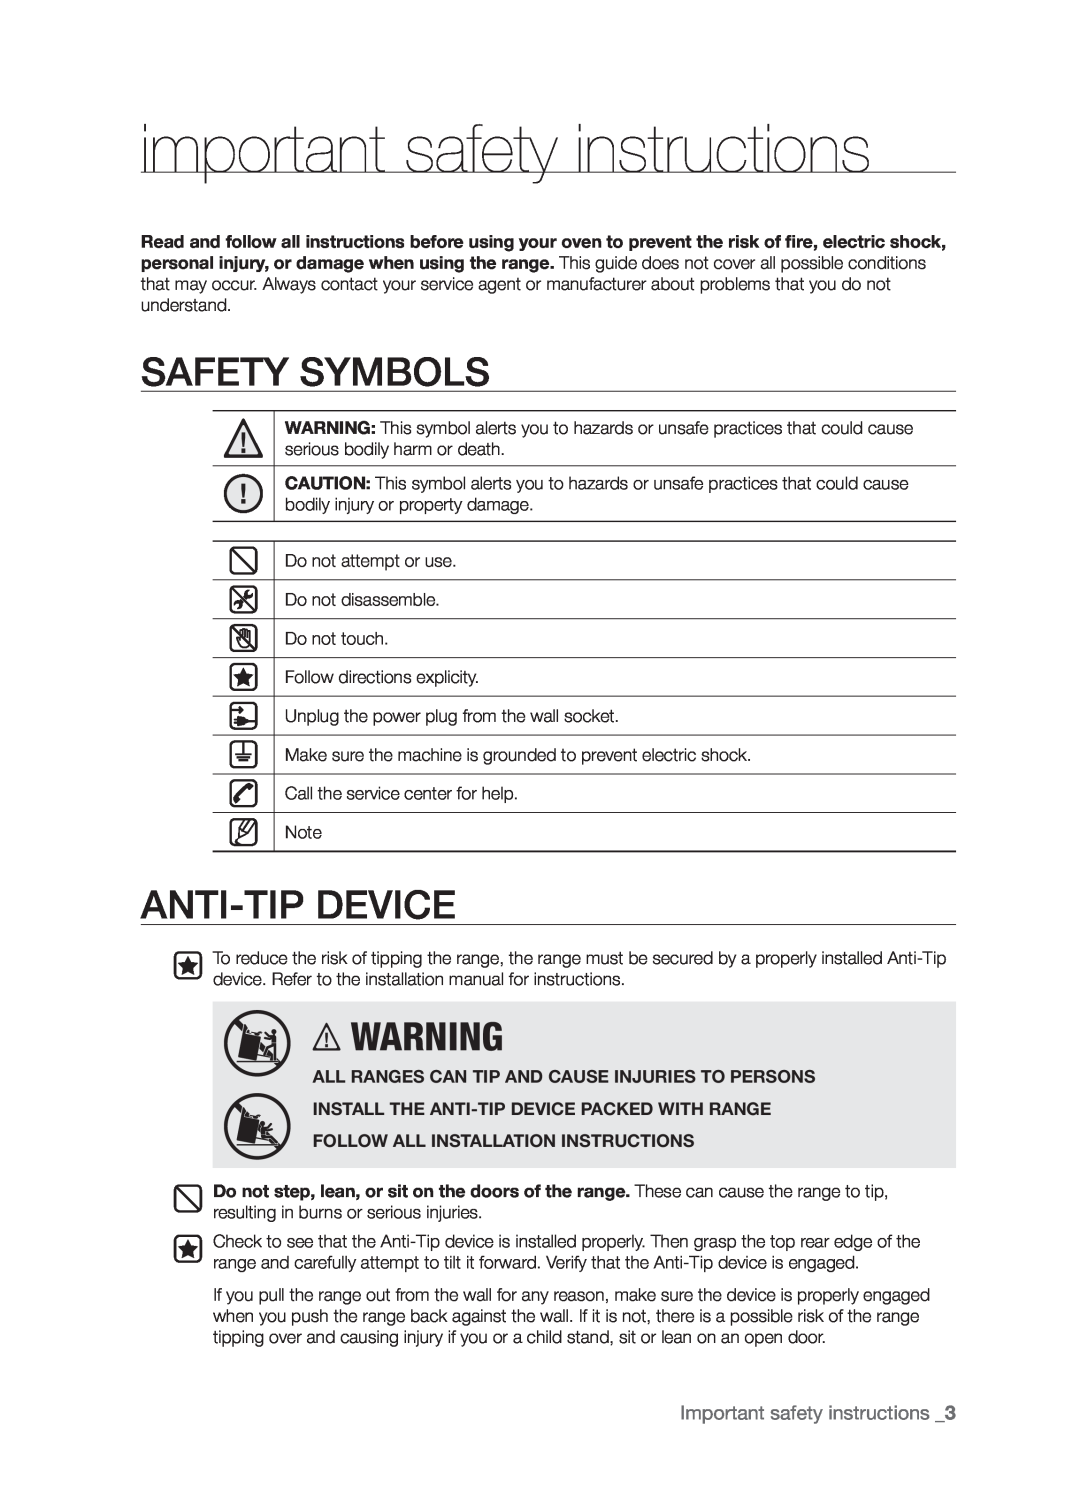 Samsung FTQ386LWX important safety instructions, Safety Symbols, Anti-Tipdevice, Important safety instructions _ 